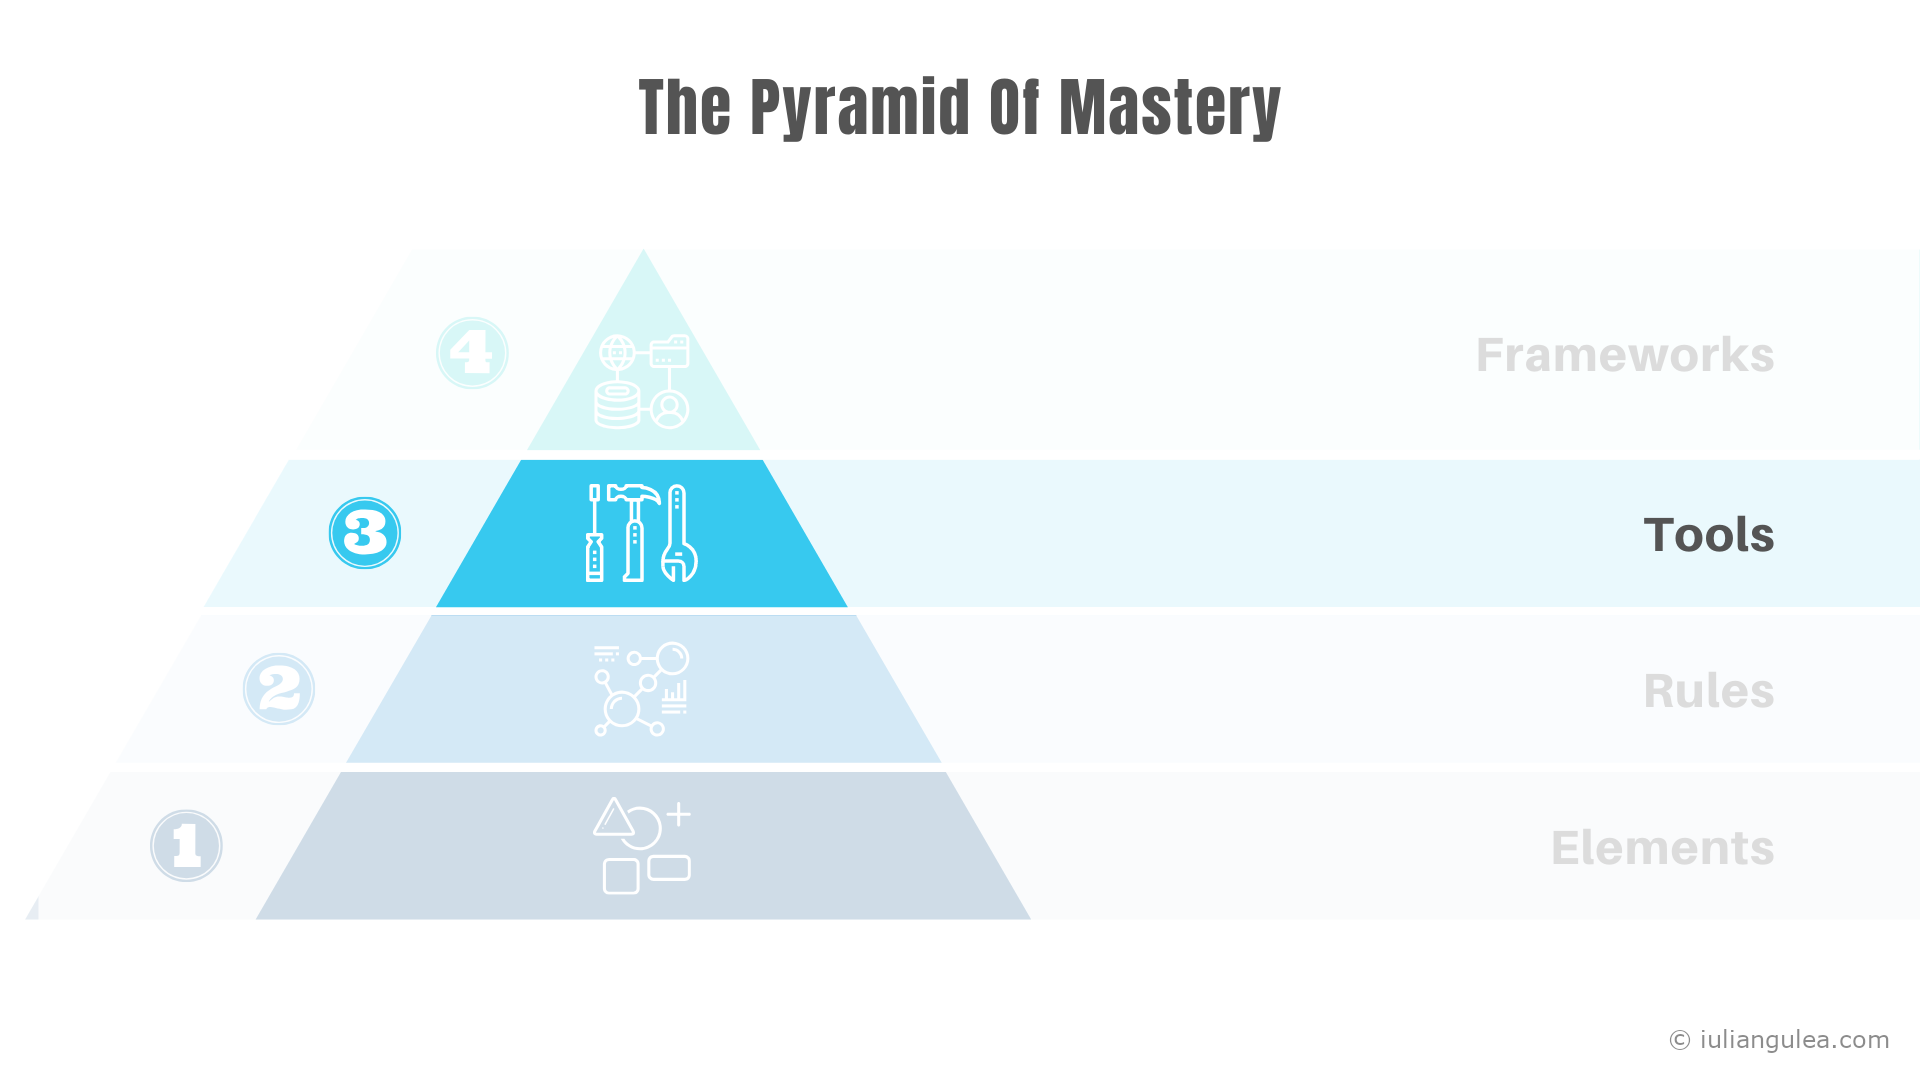 The Pyramid Of Mastery - The Tools